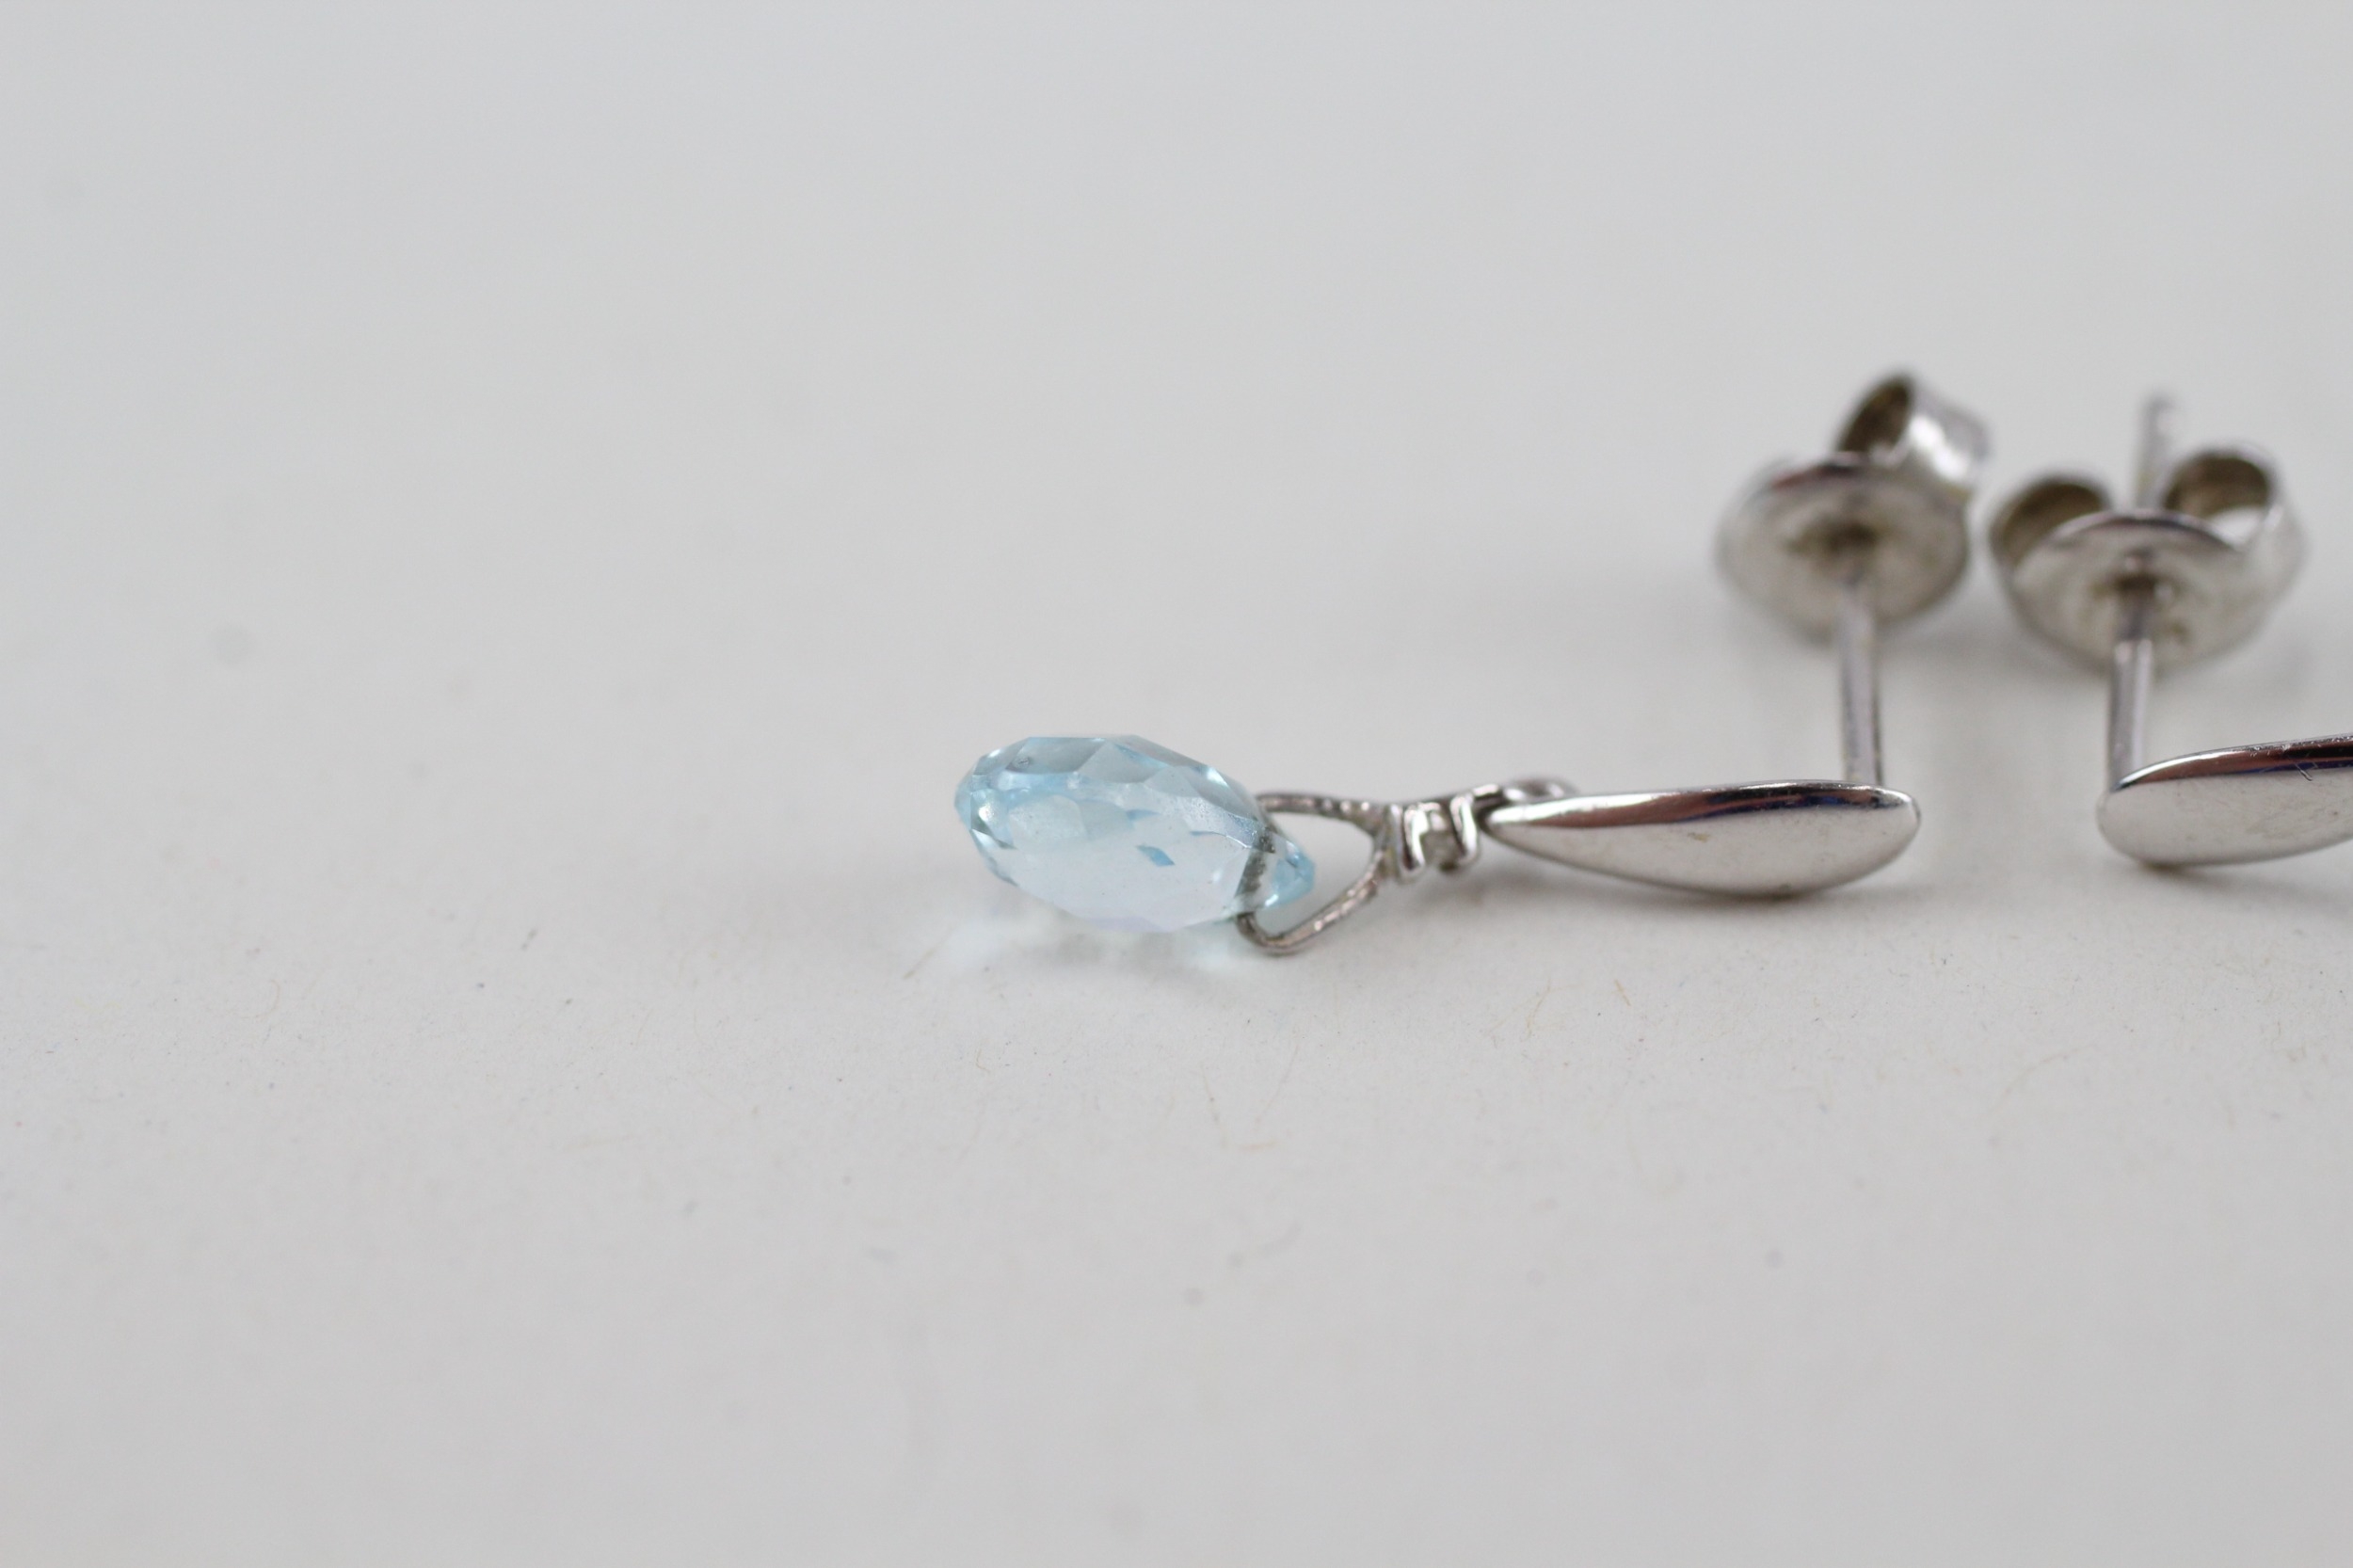 9ct gold blue gemstone drop earrings (1.1g) - Image 2 of 4